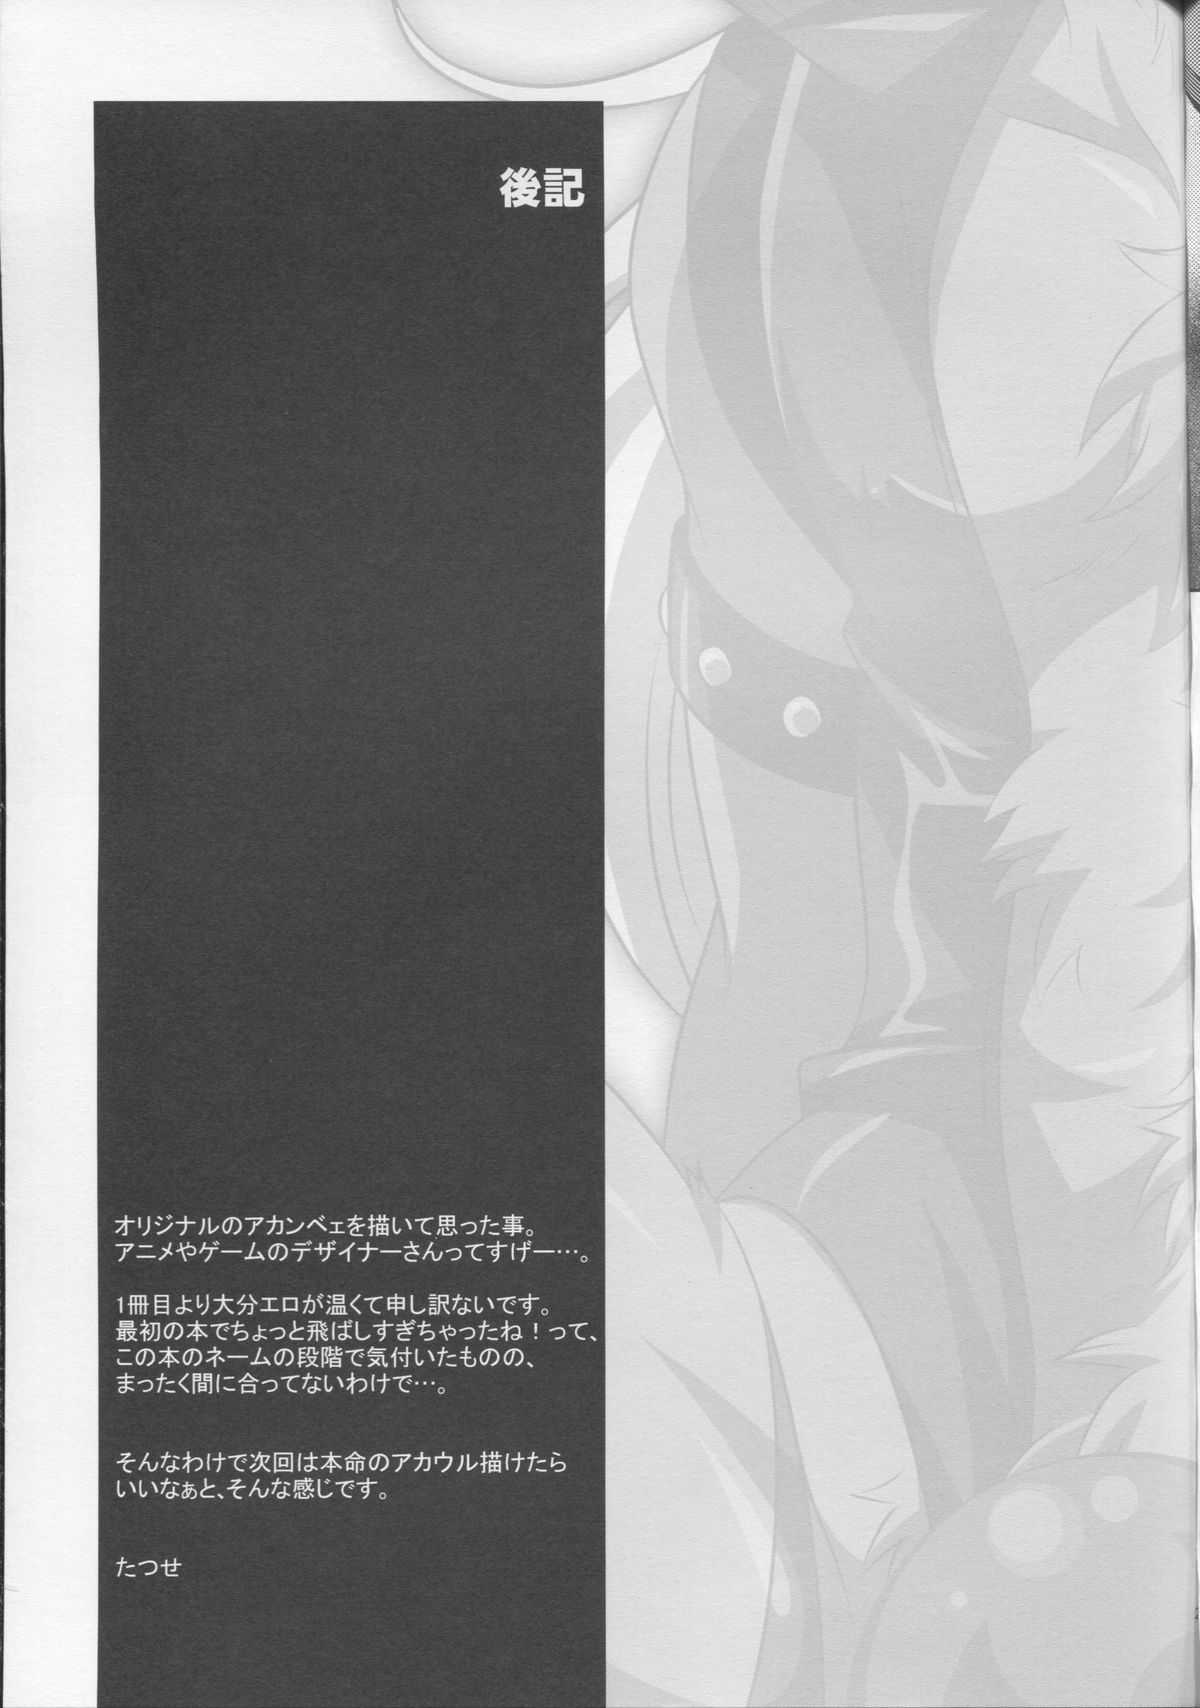 Ultra Happy Bad End 2 (Smile PreCure! Fan Book No. 2) 